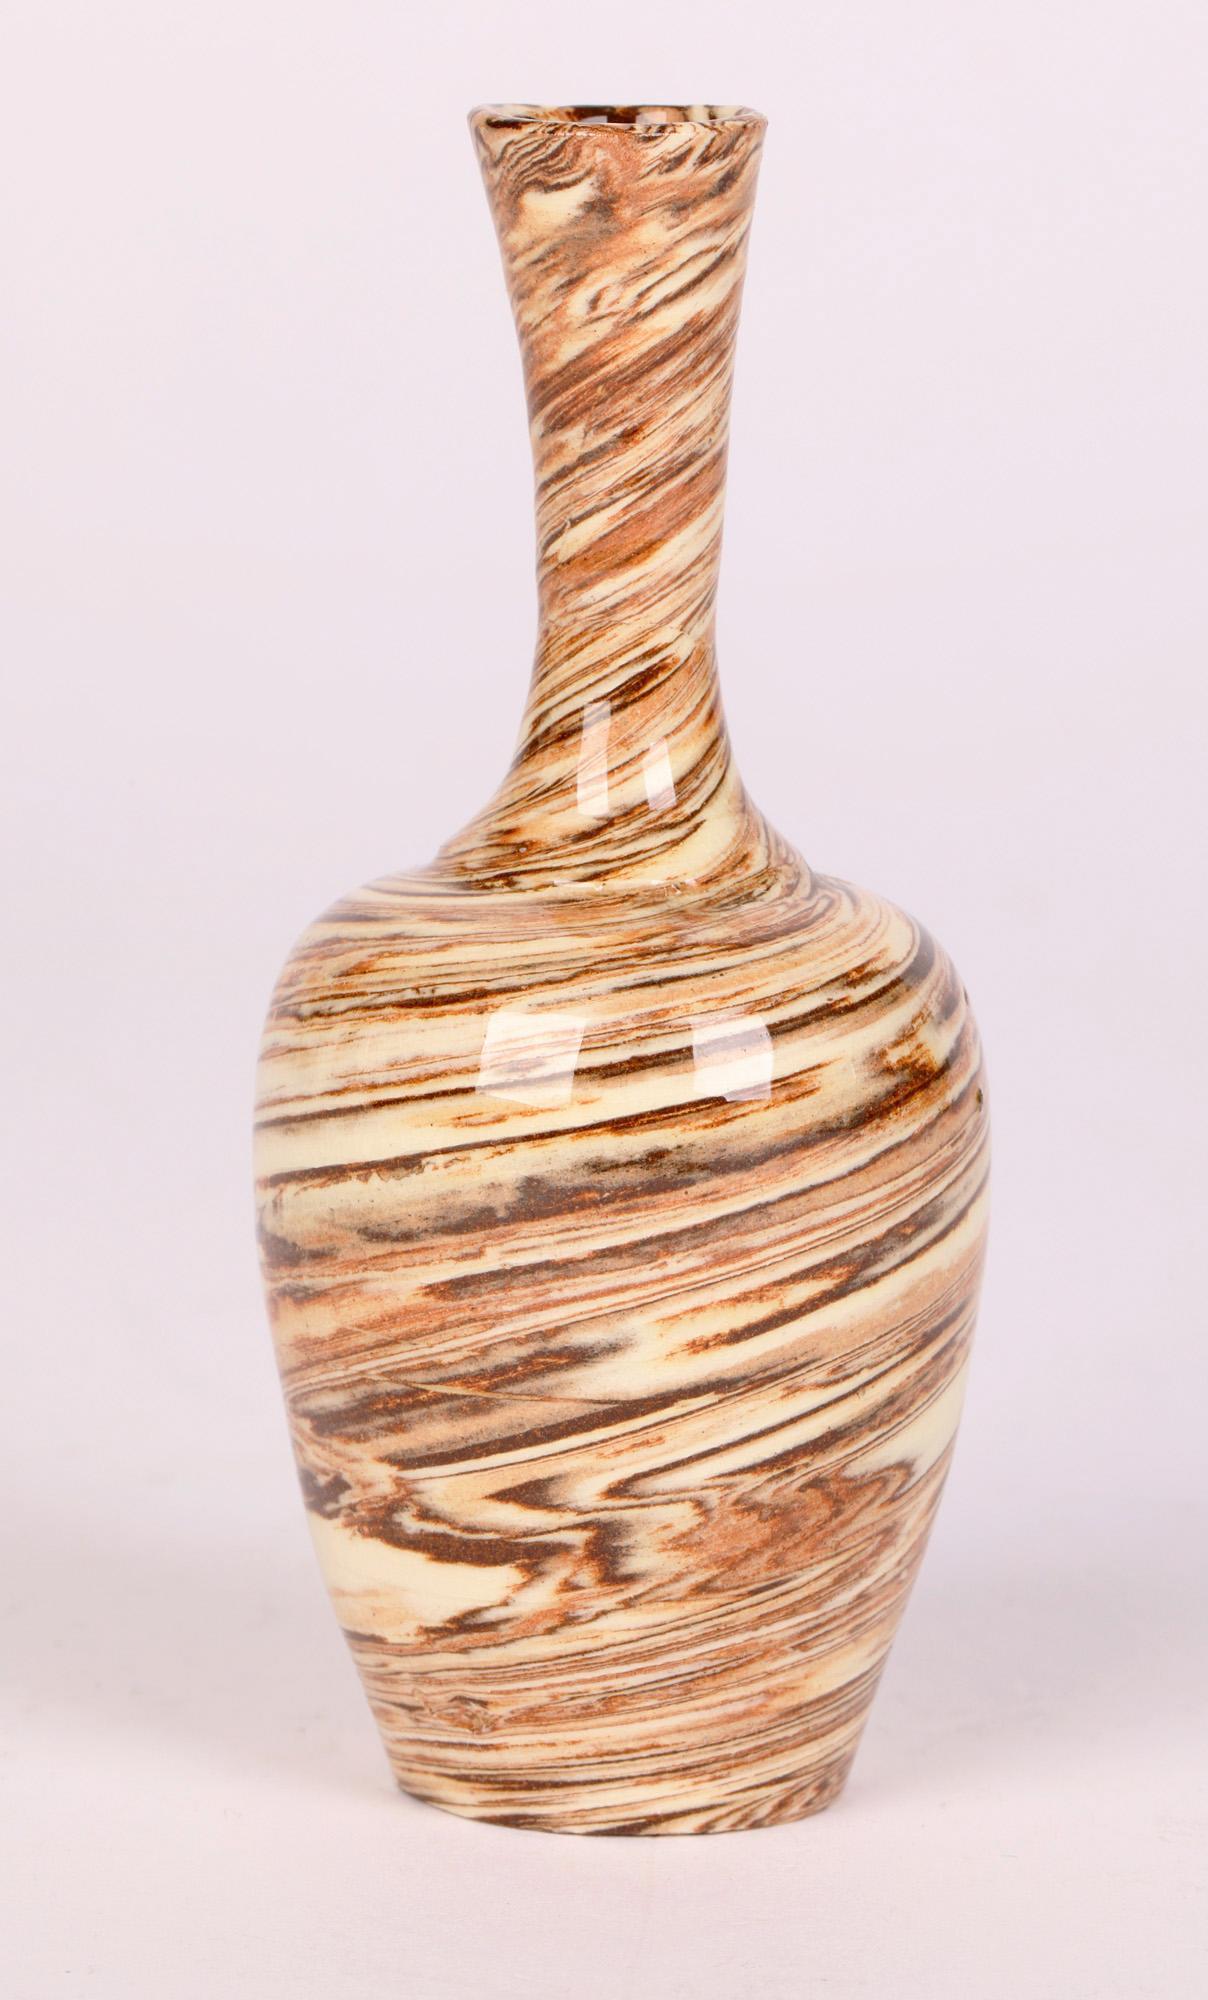 Late Victorian English Antique Miniature Slip Ware Agate Design Pottery Bottle Vase For Sale